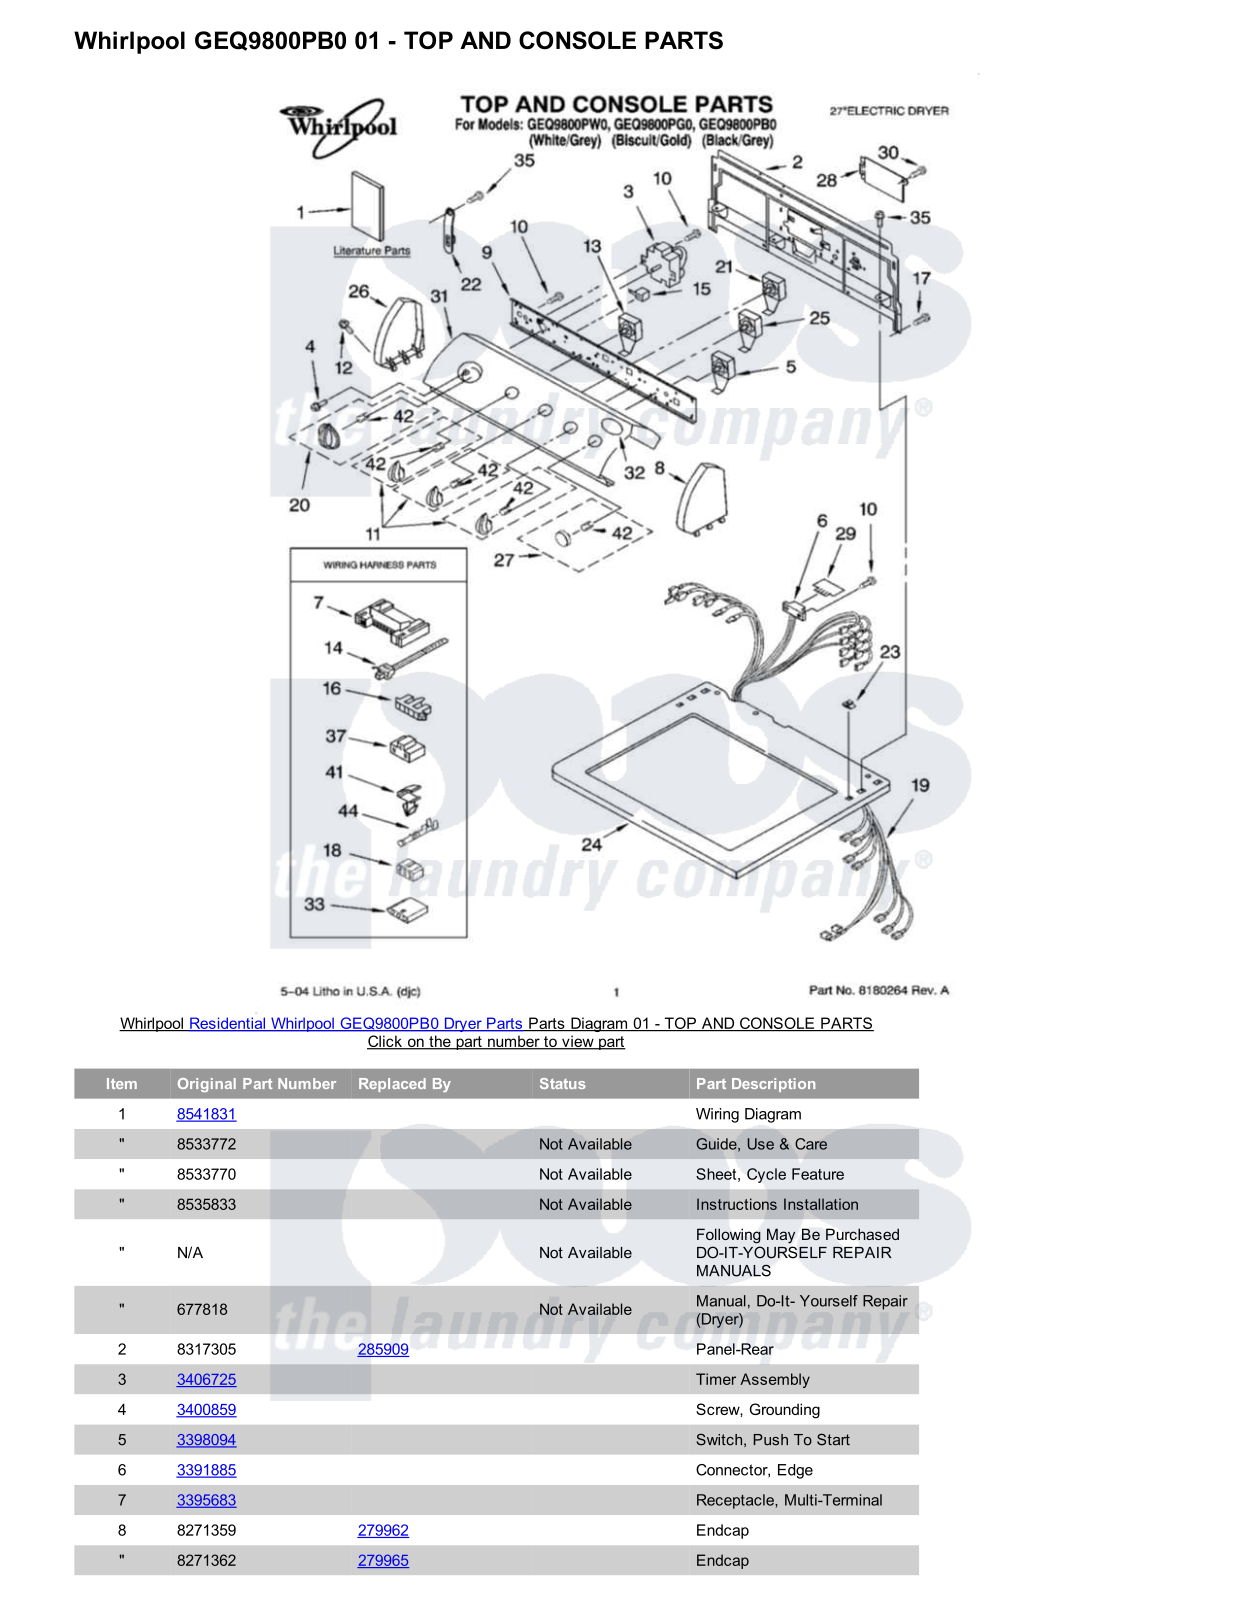 Whirlpool GEQ9800PB0 Parts Diagram